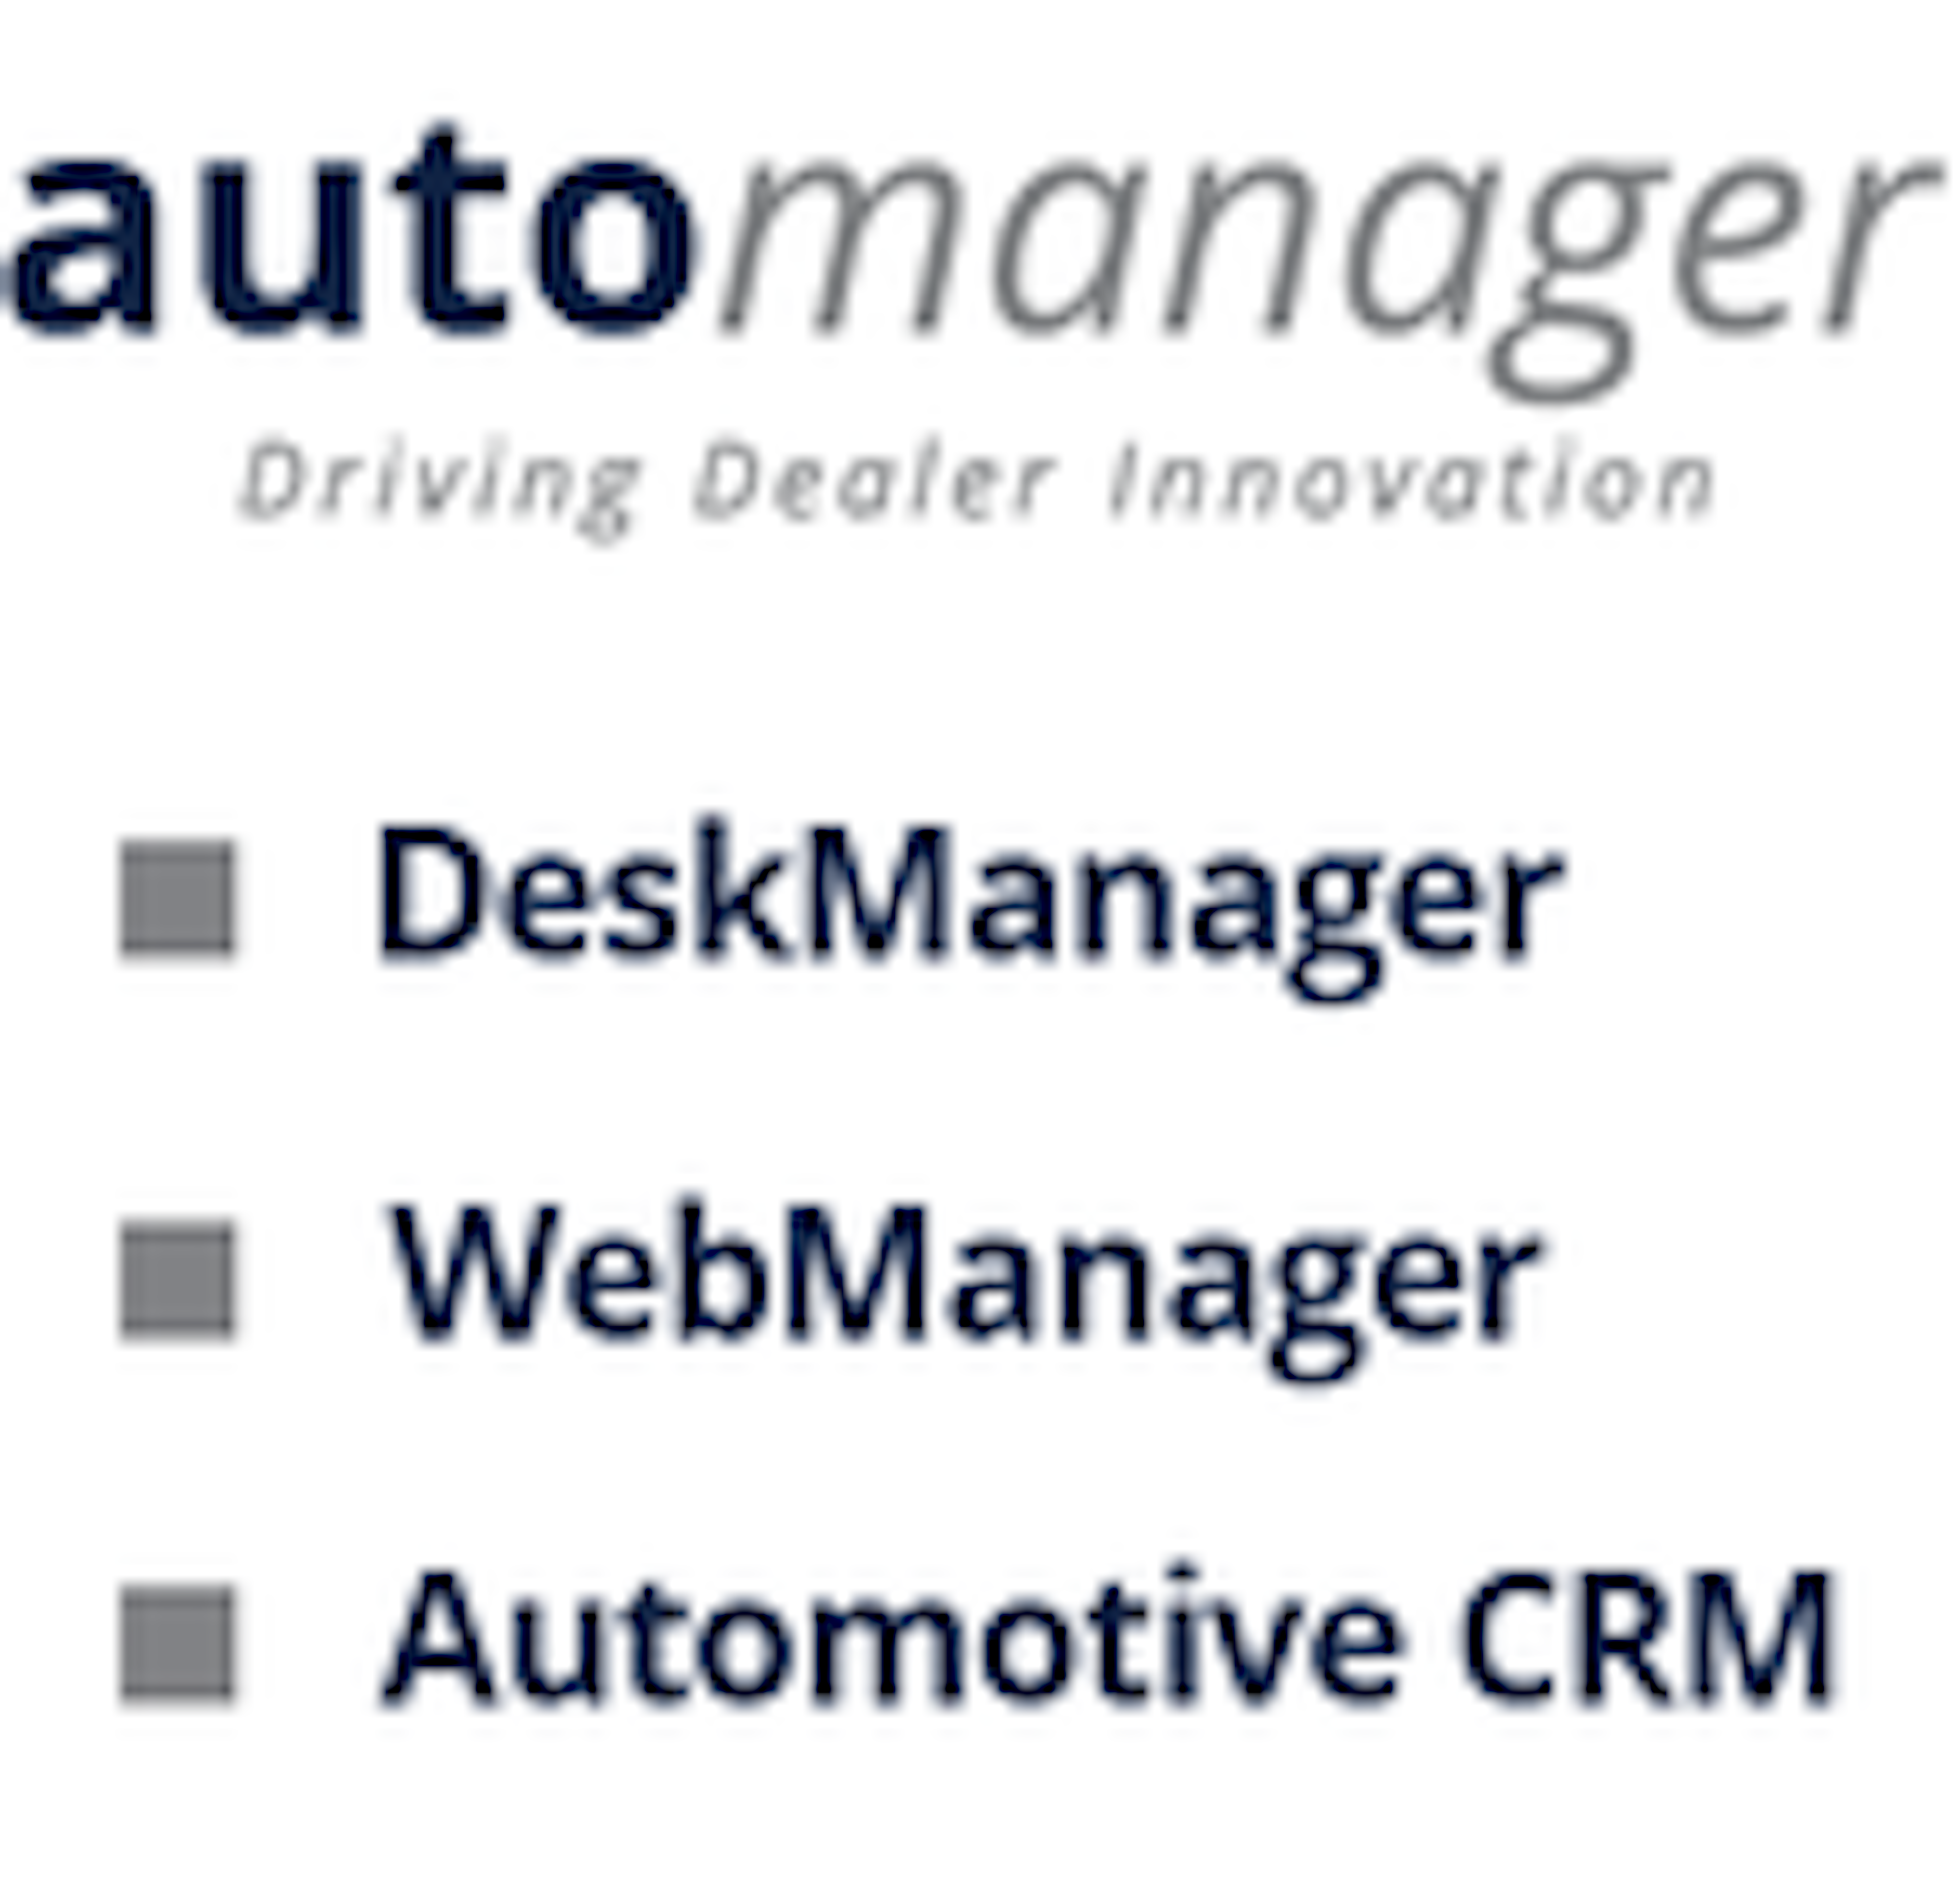 AutoManager Logo